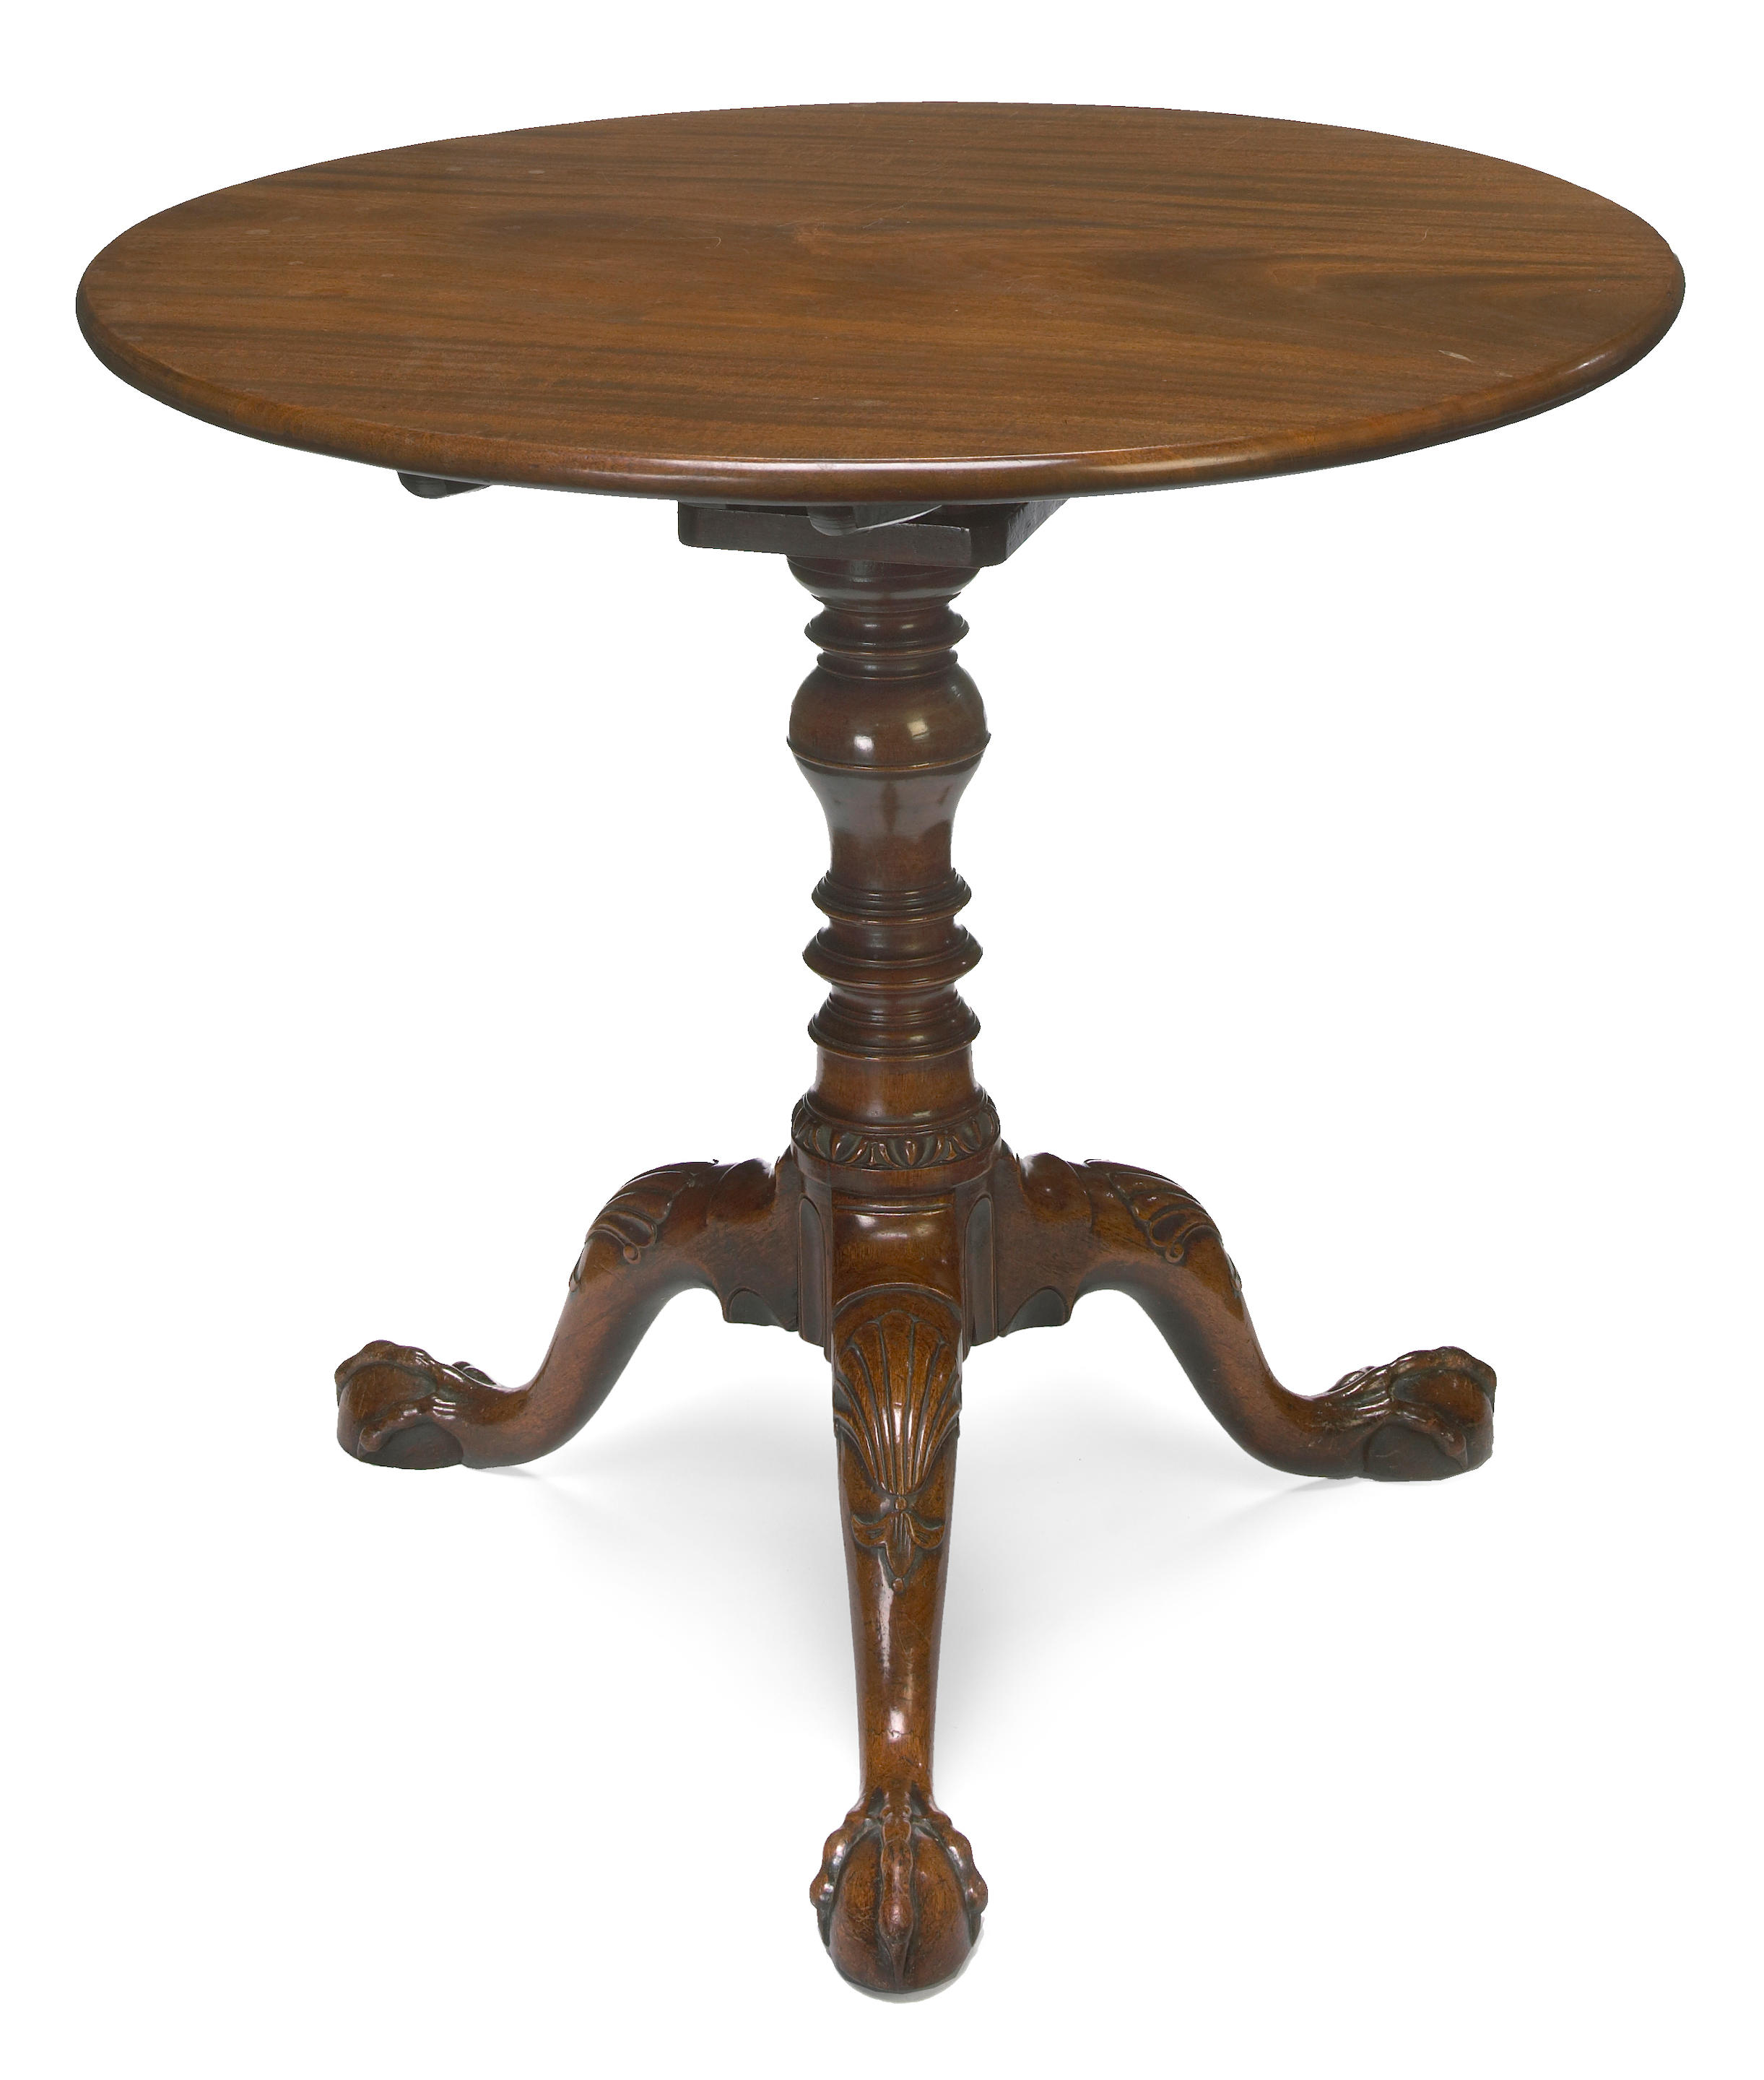 A good George III carved mahogany tripod table third quarter 18th century